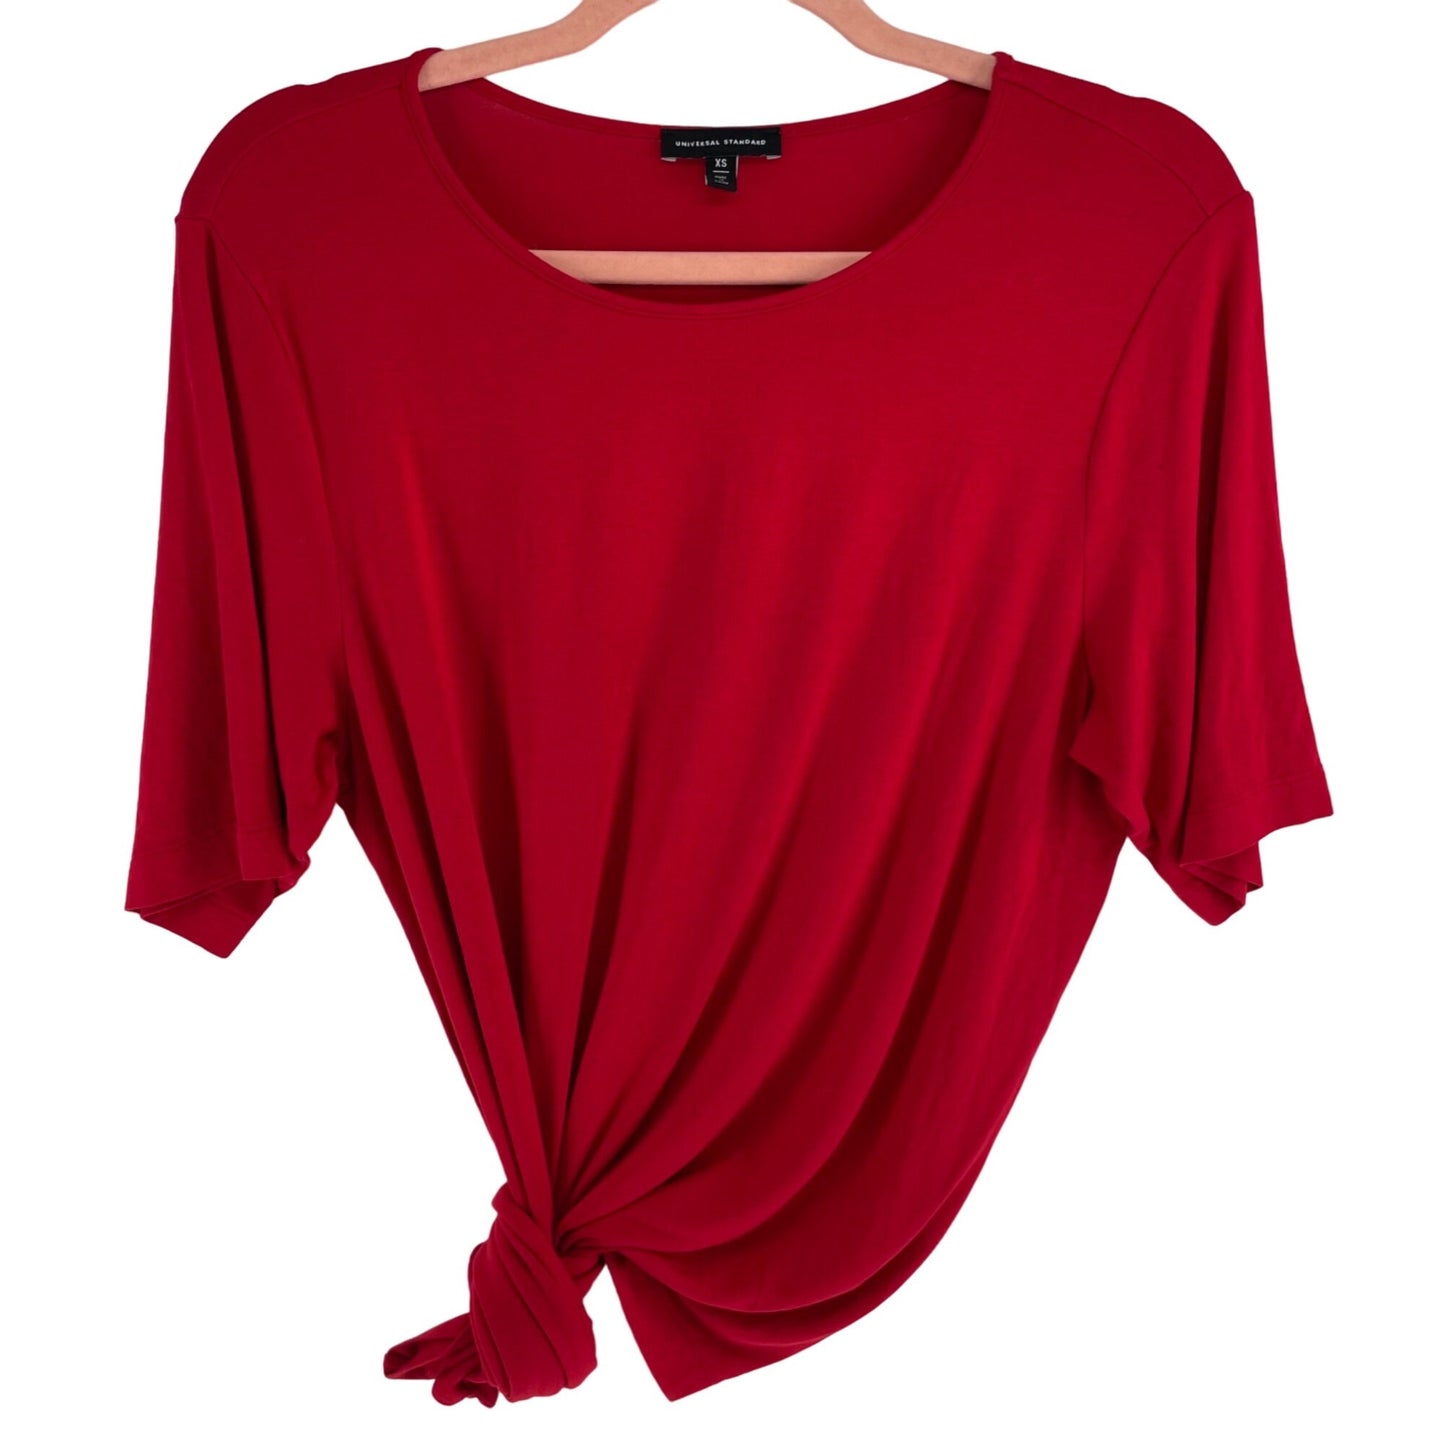 Universal Standard Women's Size XS Red Asymmetrical Crew Neck T-Shirt